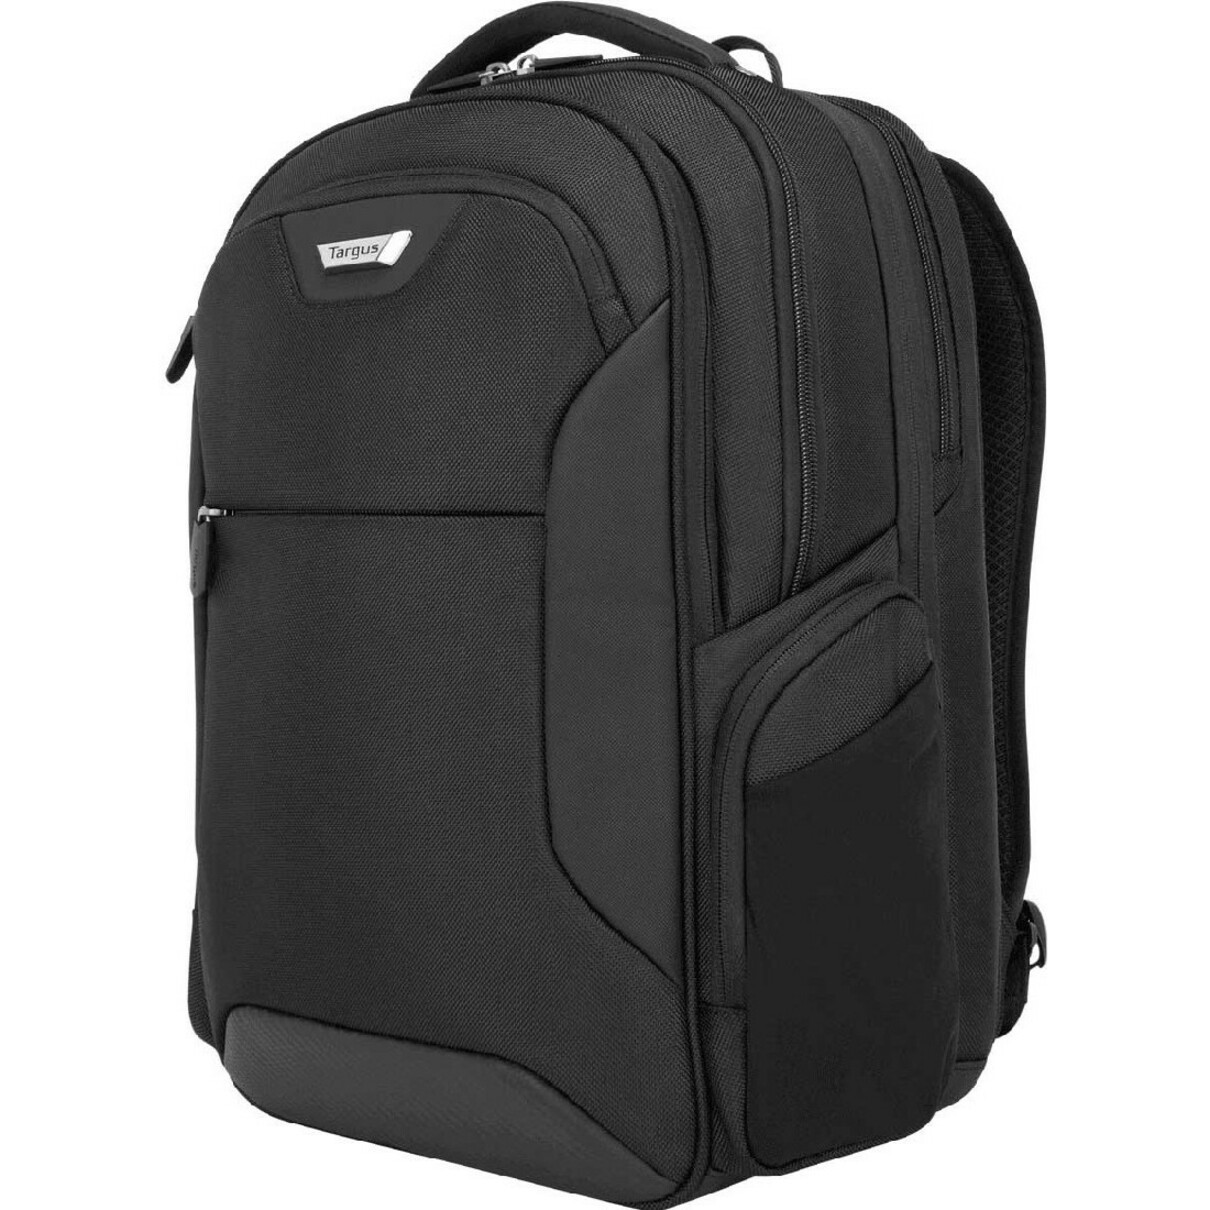 Targus Corporate Traveler BackpackBackpack CUCT02B - Corporate Armor